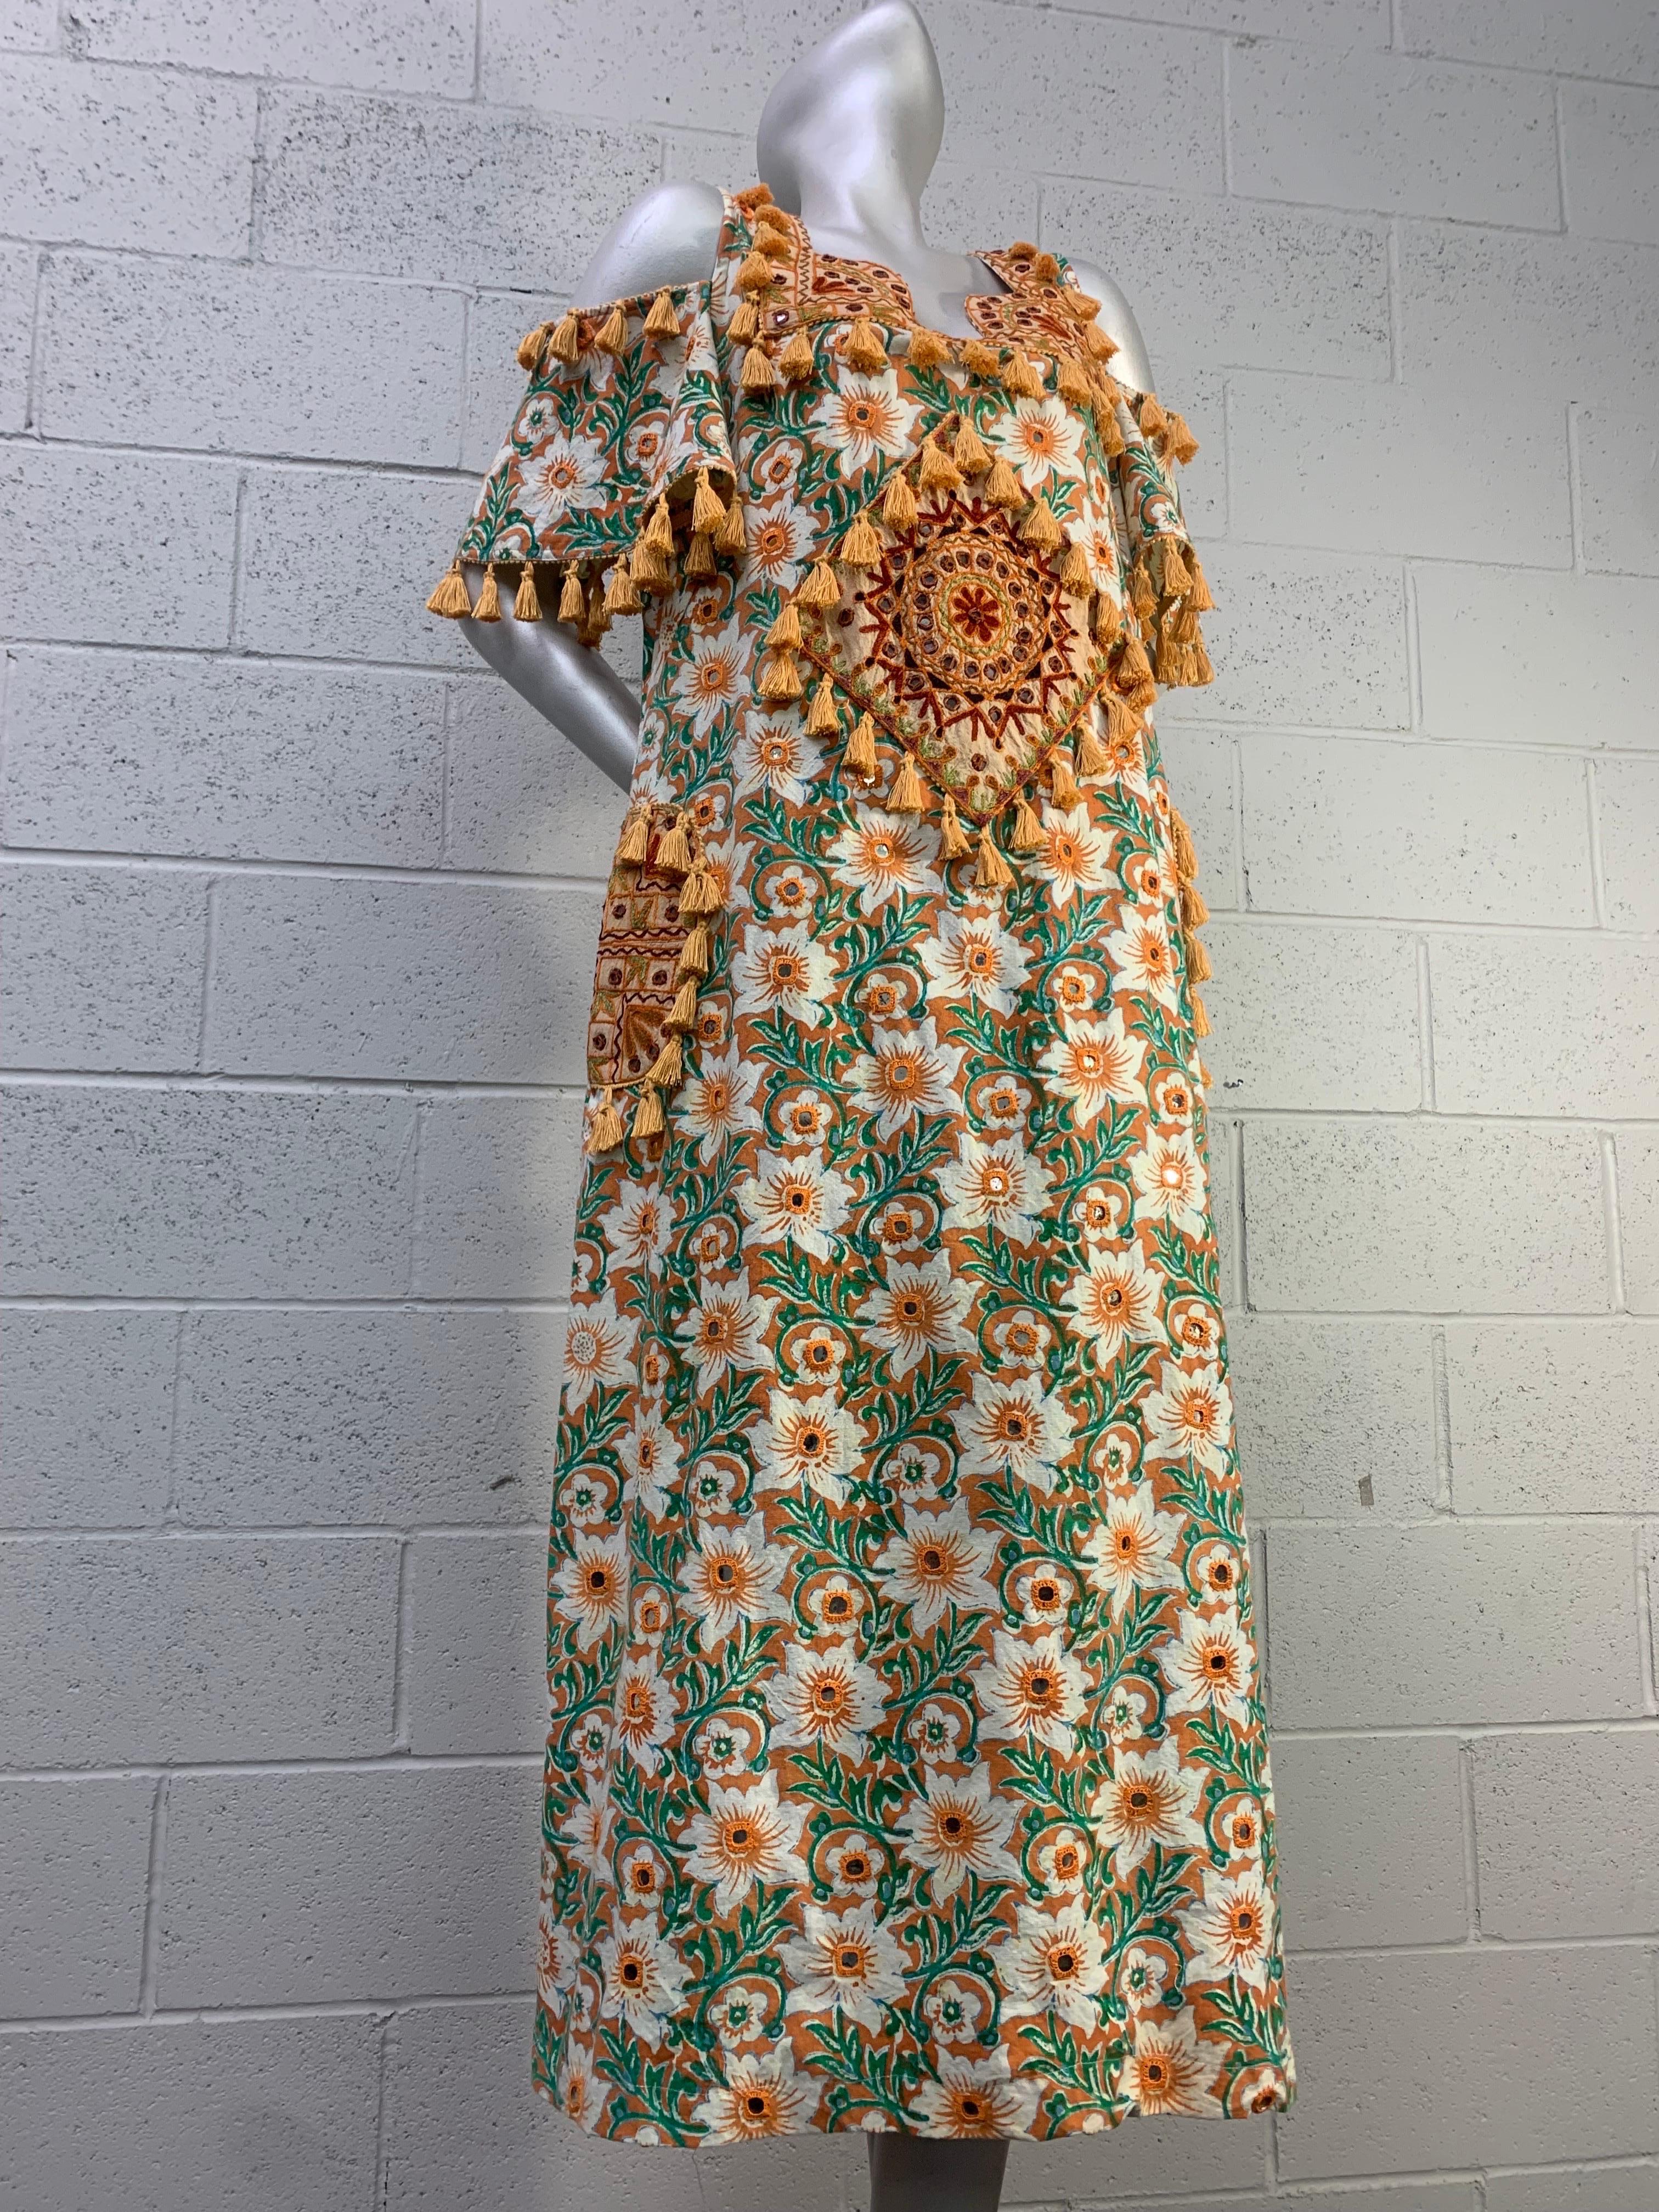 Torso Creations Cotton Lily Print Resort Dress w Mirror Tile and Tassel Fringe 2